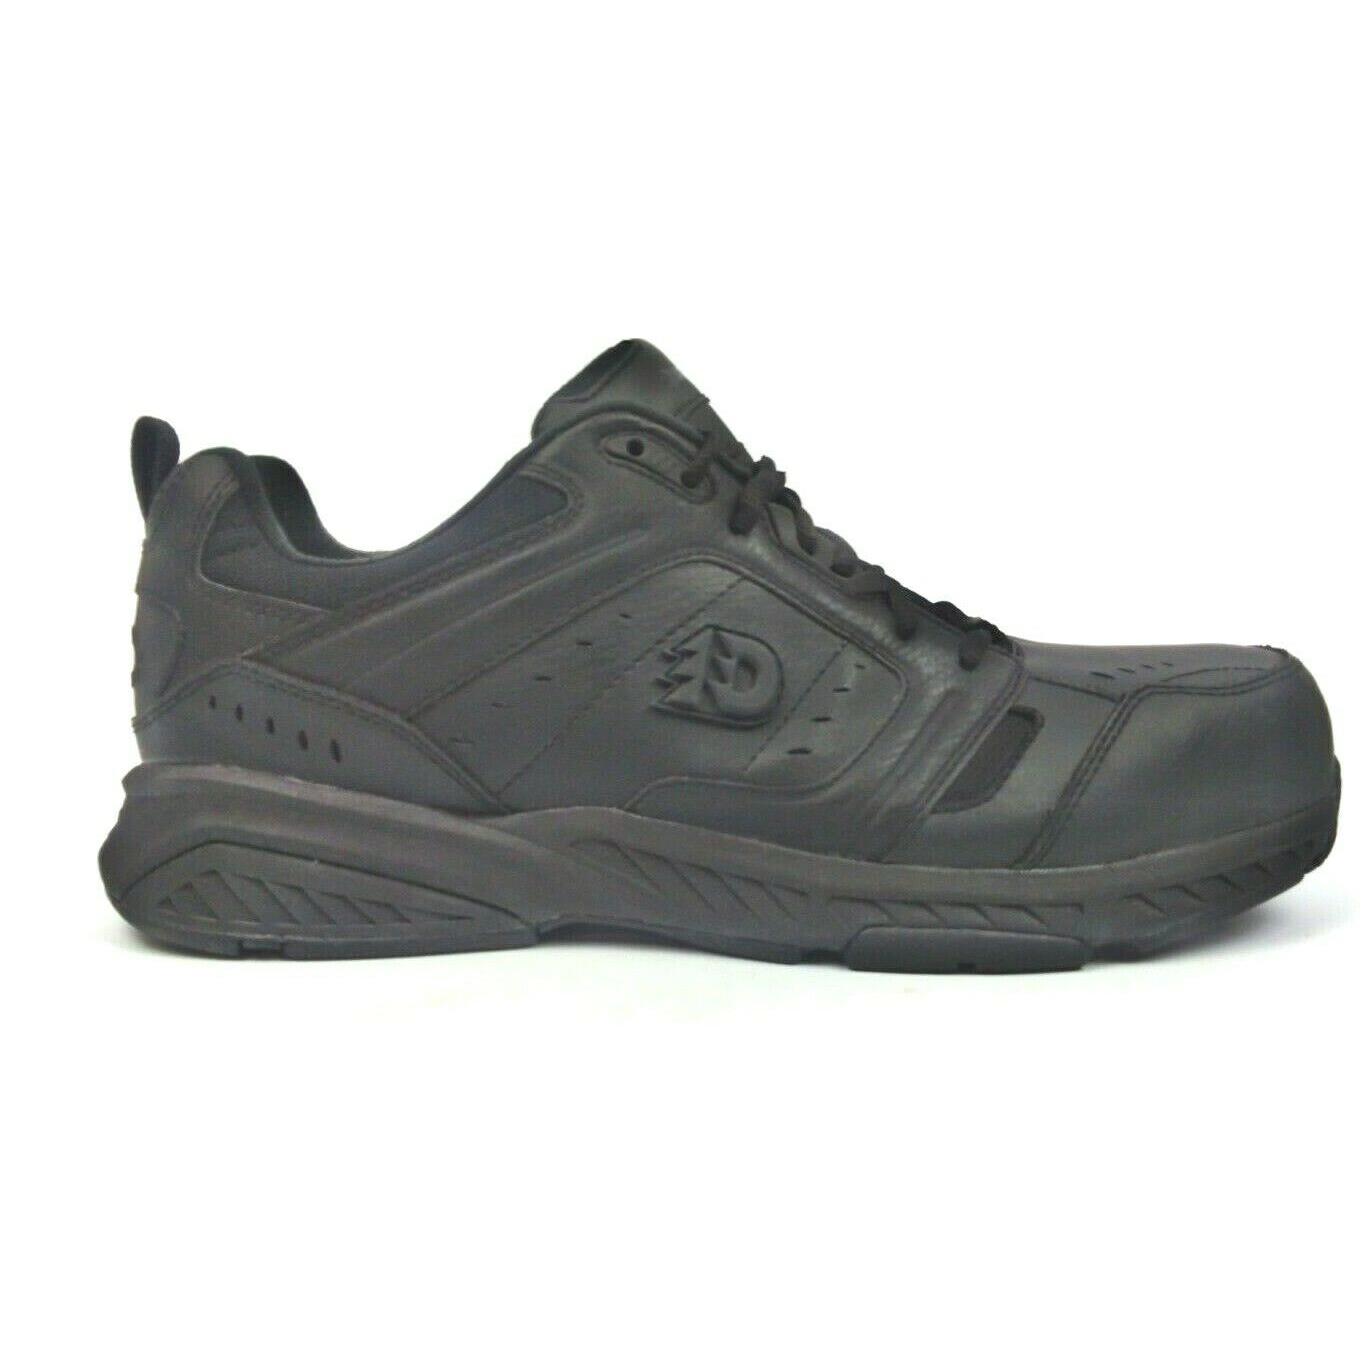 Dunham by Balance Men`s Lace Up Athletic Work Shoes Shoes Black Size 14